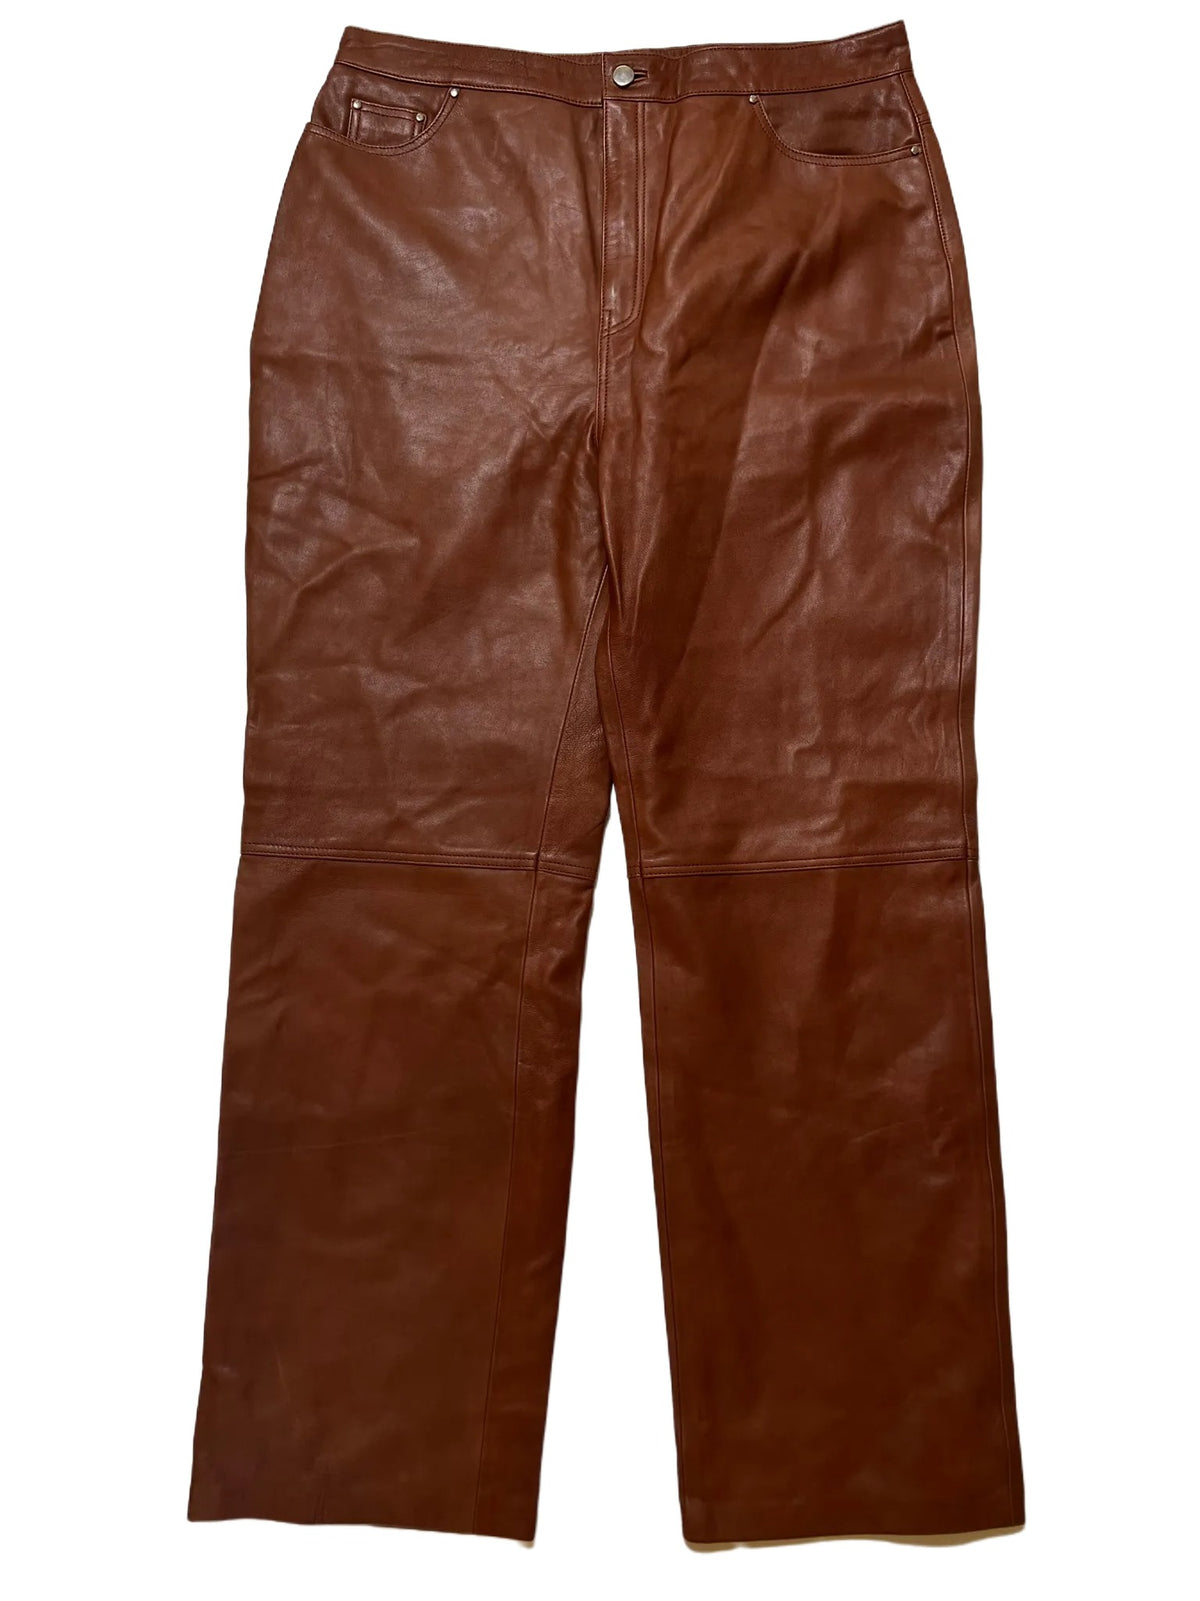 LPA- Brown Leather Pants